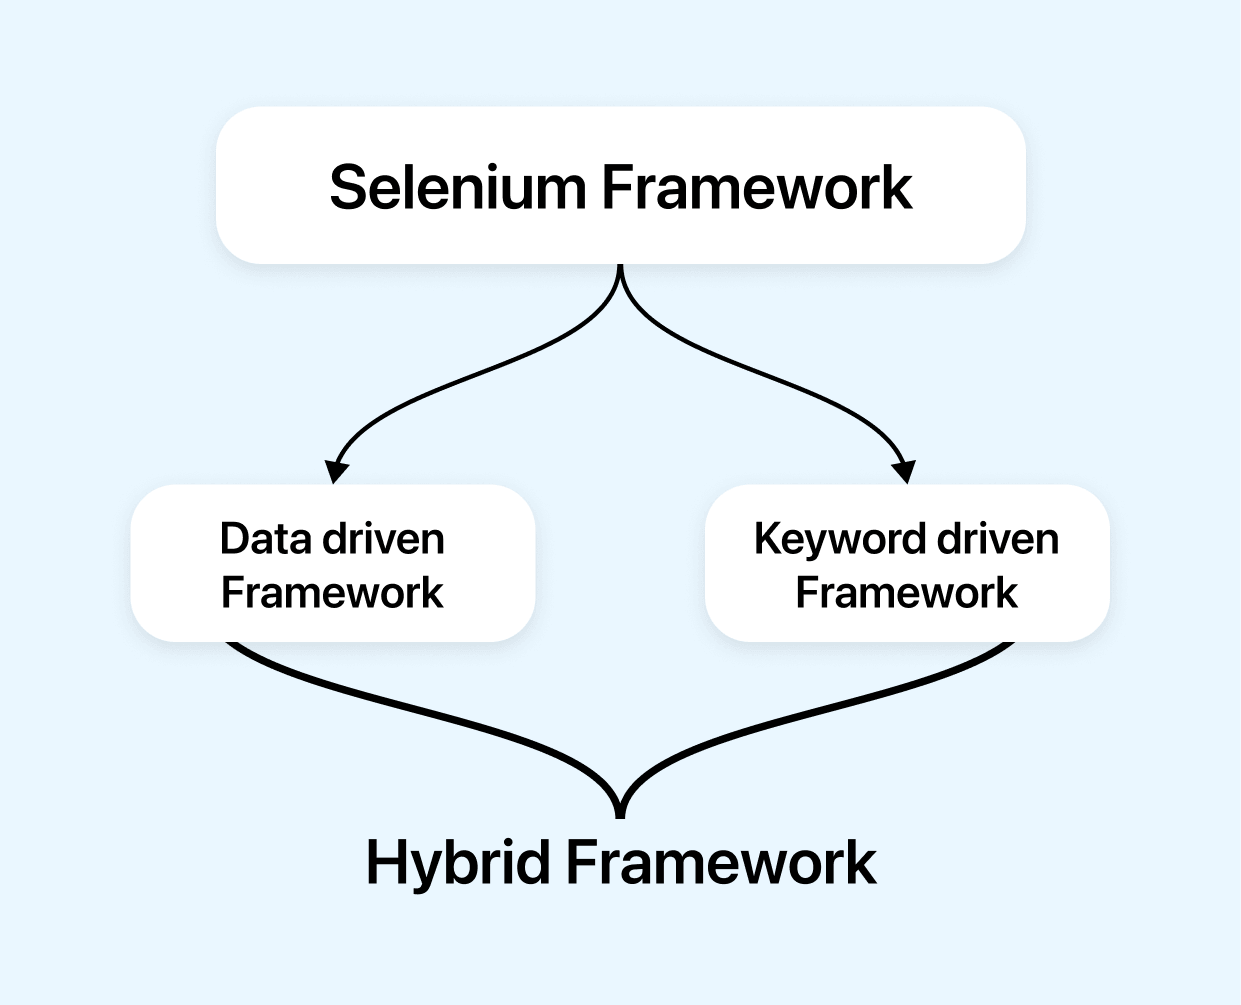 selenium framework